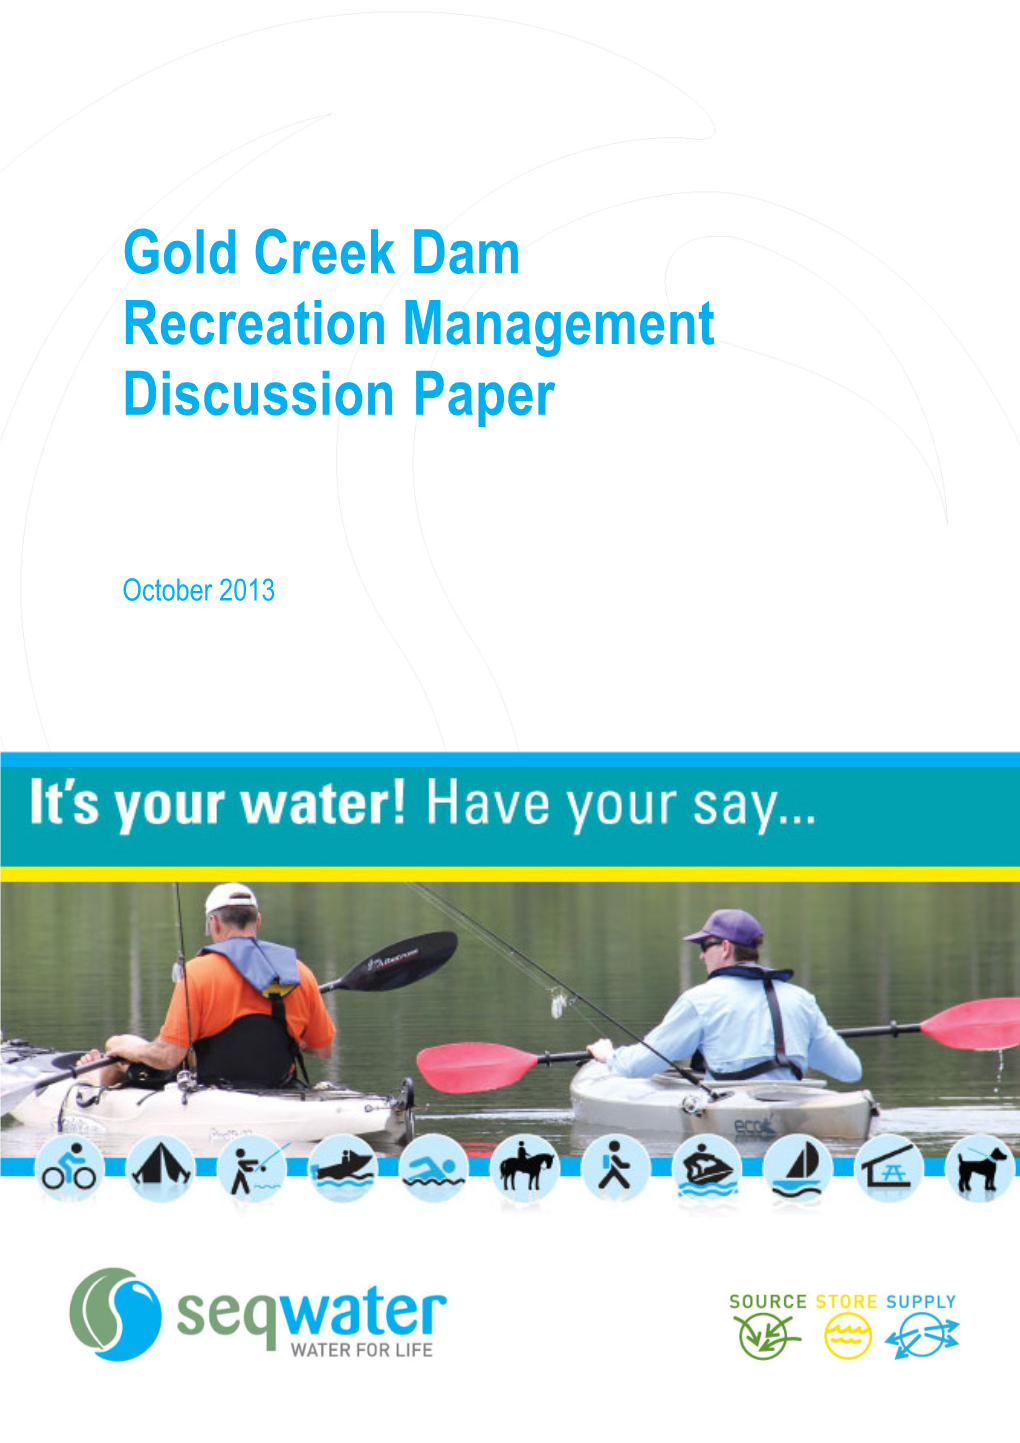 Gold Creek Dam Recreation Management Discussion Paper